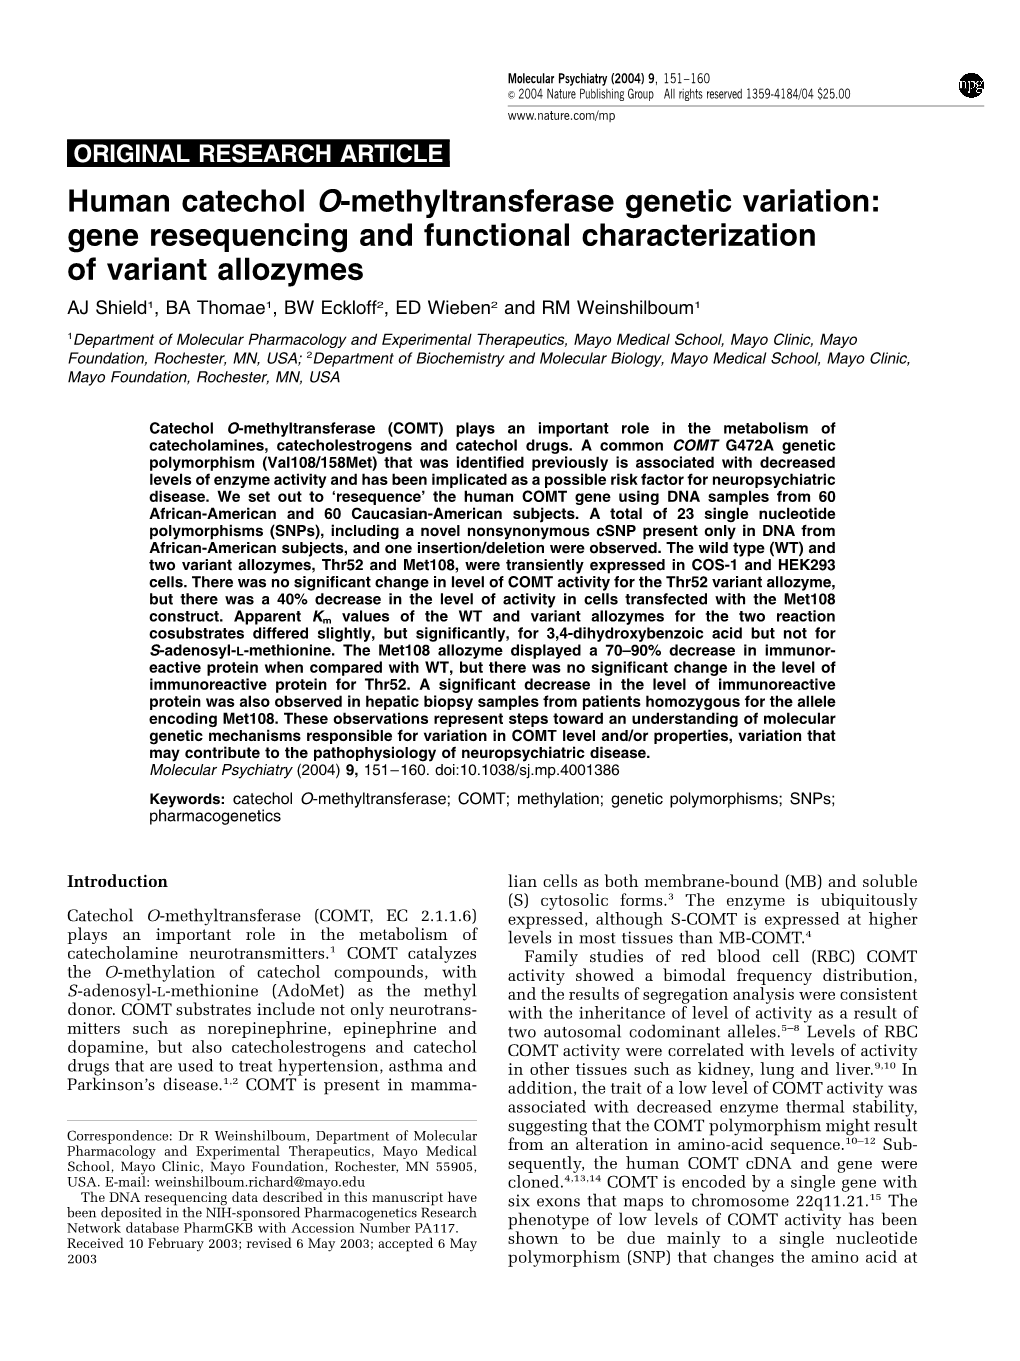 Human Catechol O-Methyltransferase Genetic Variation